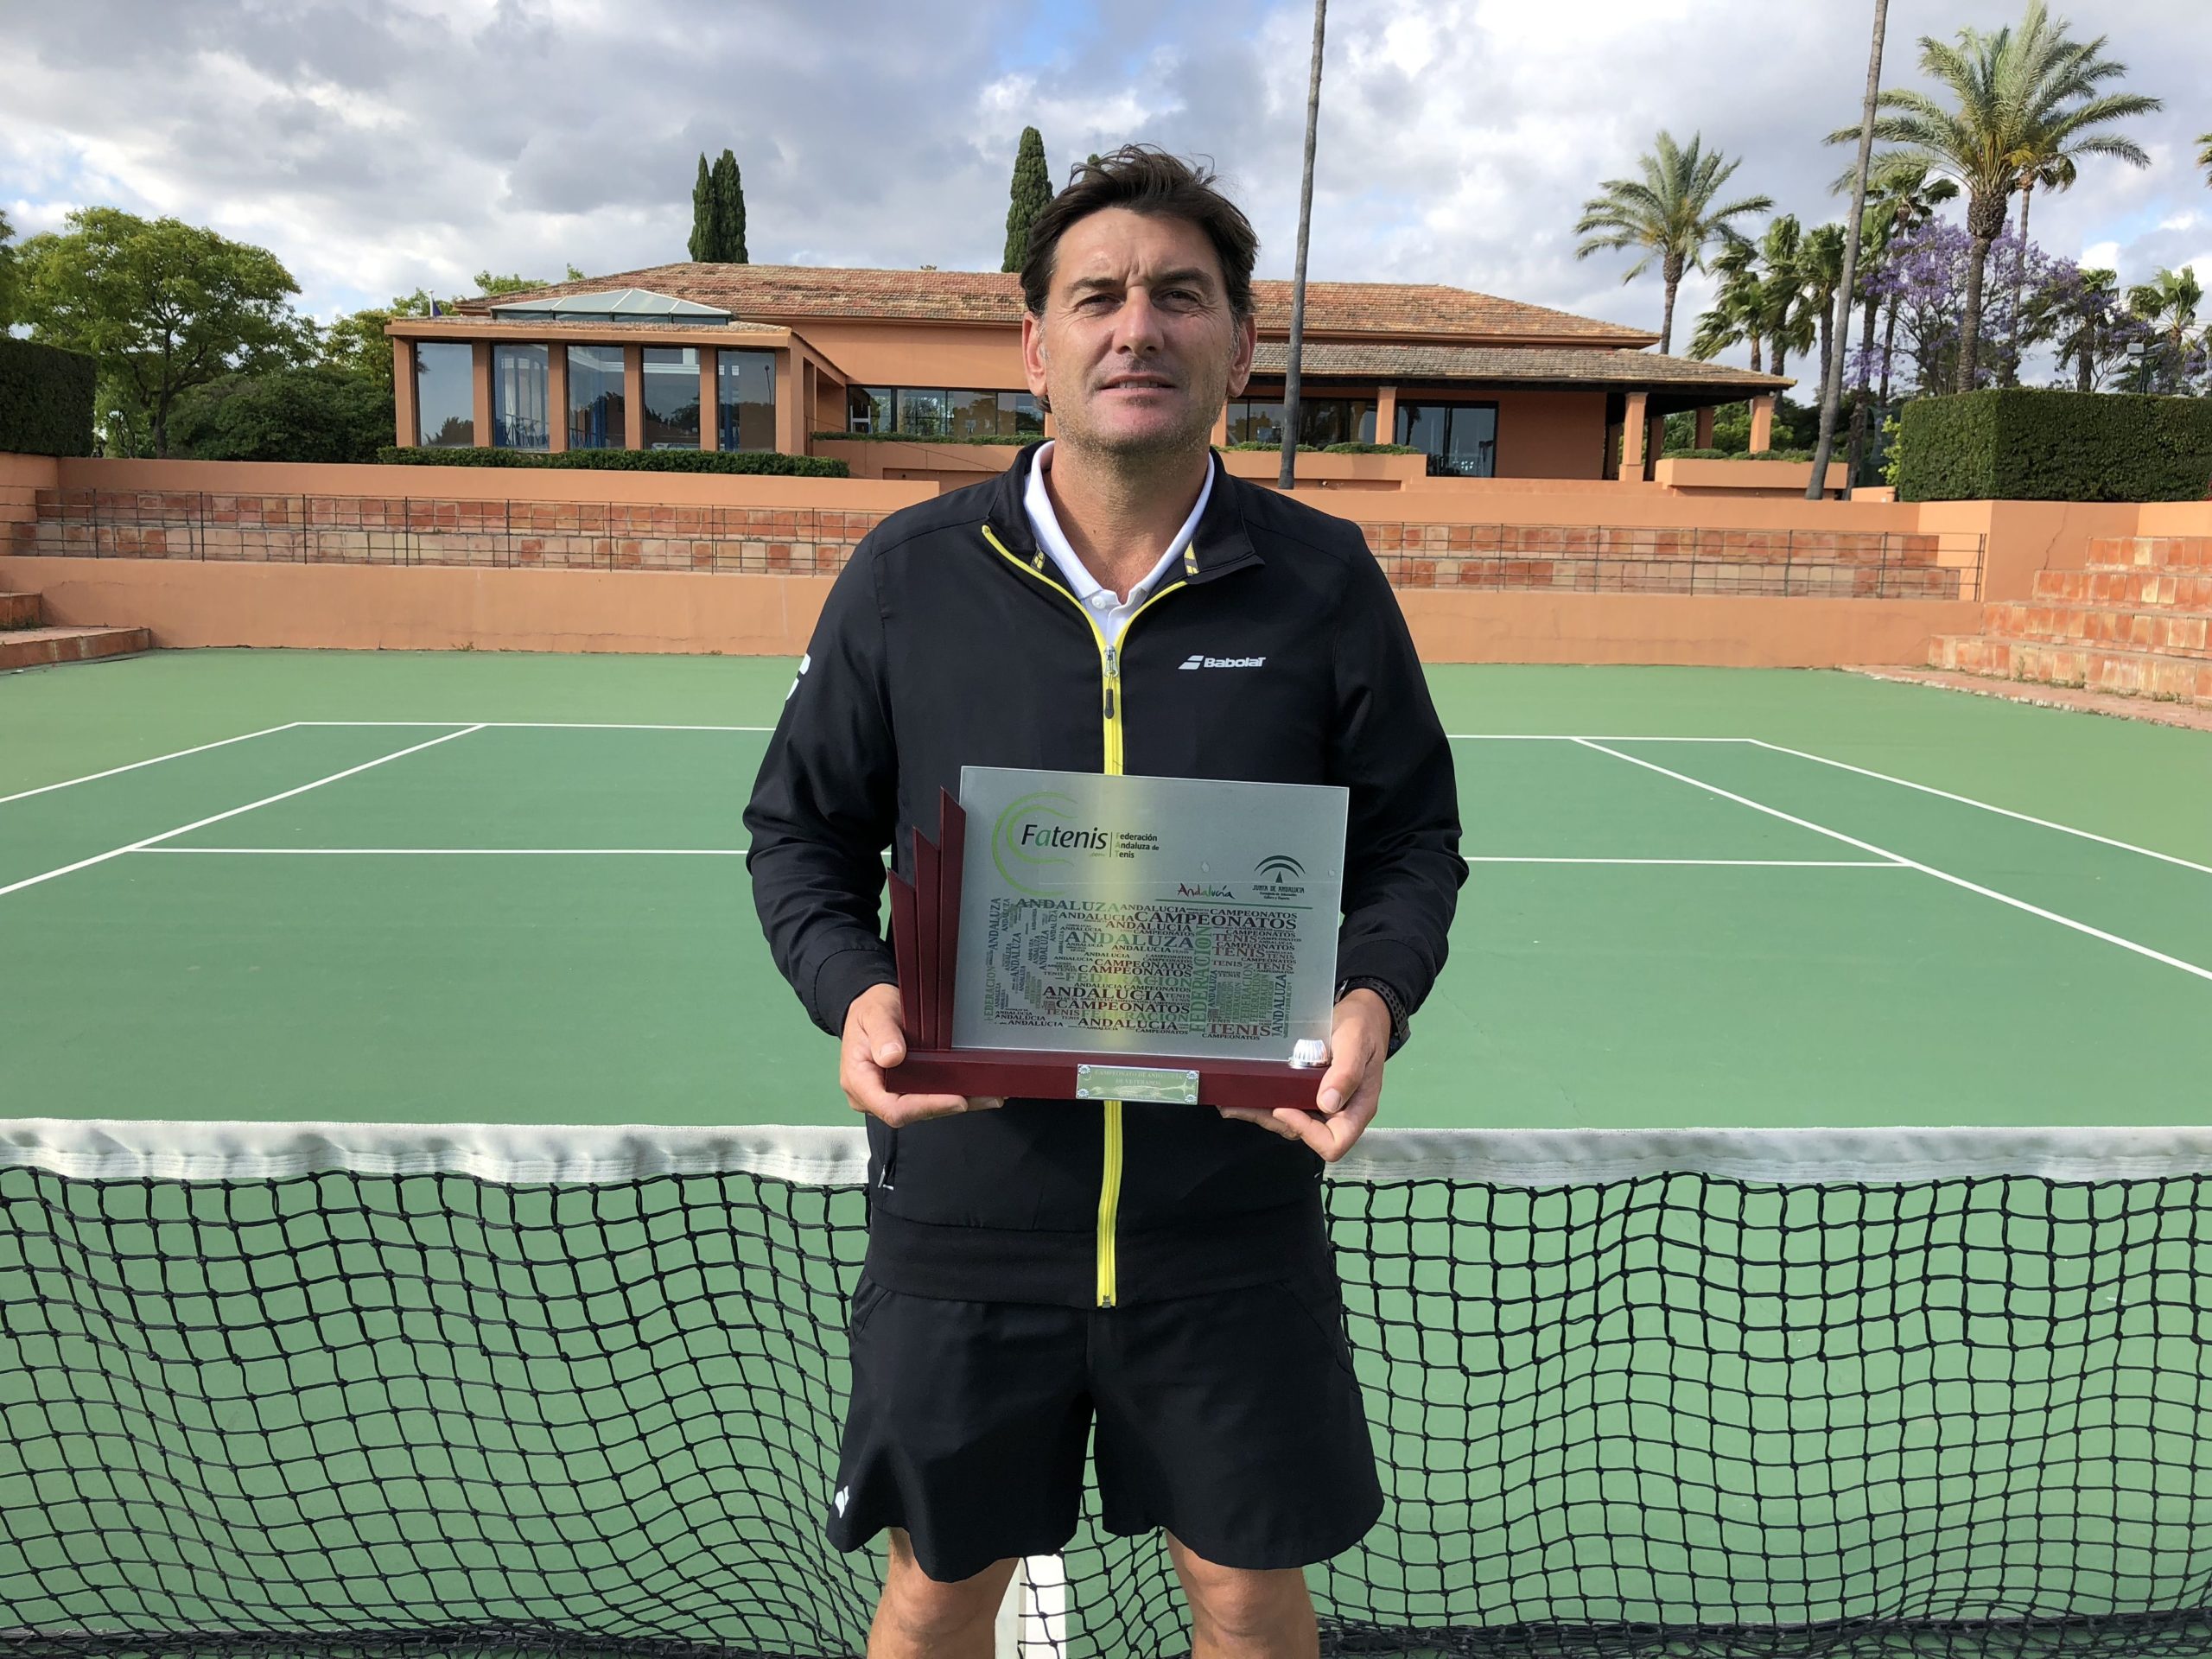 Fernando Hernandis, Campeon de Andalucia +40 de Tenis